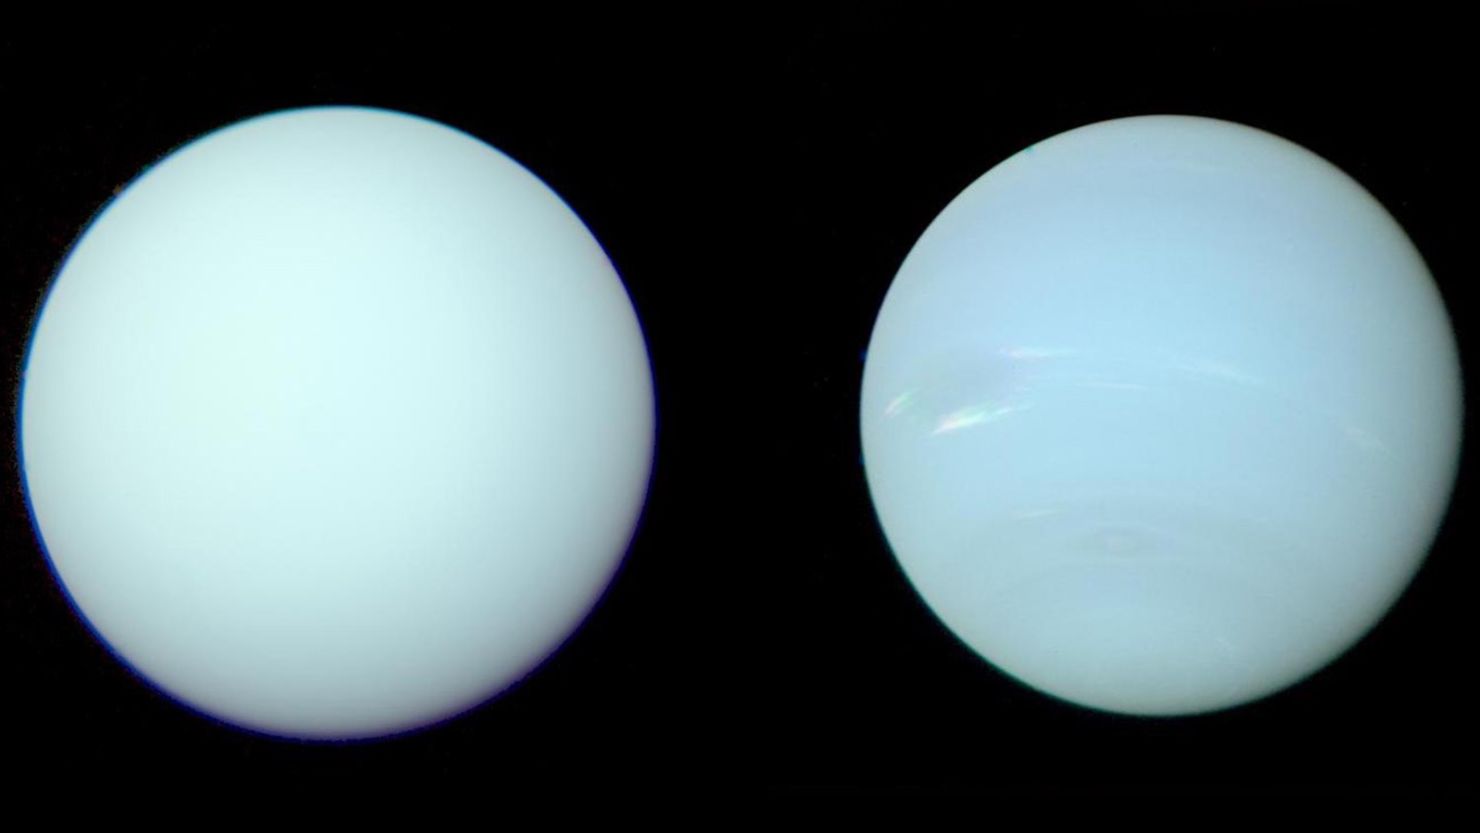 Reprocessed images show the true colors of Uranus (left) and Neptune.